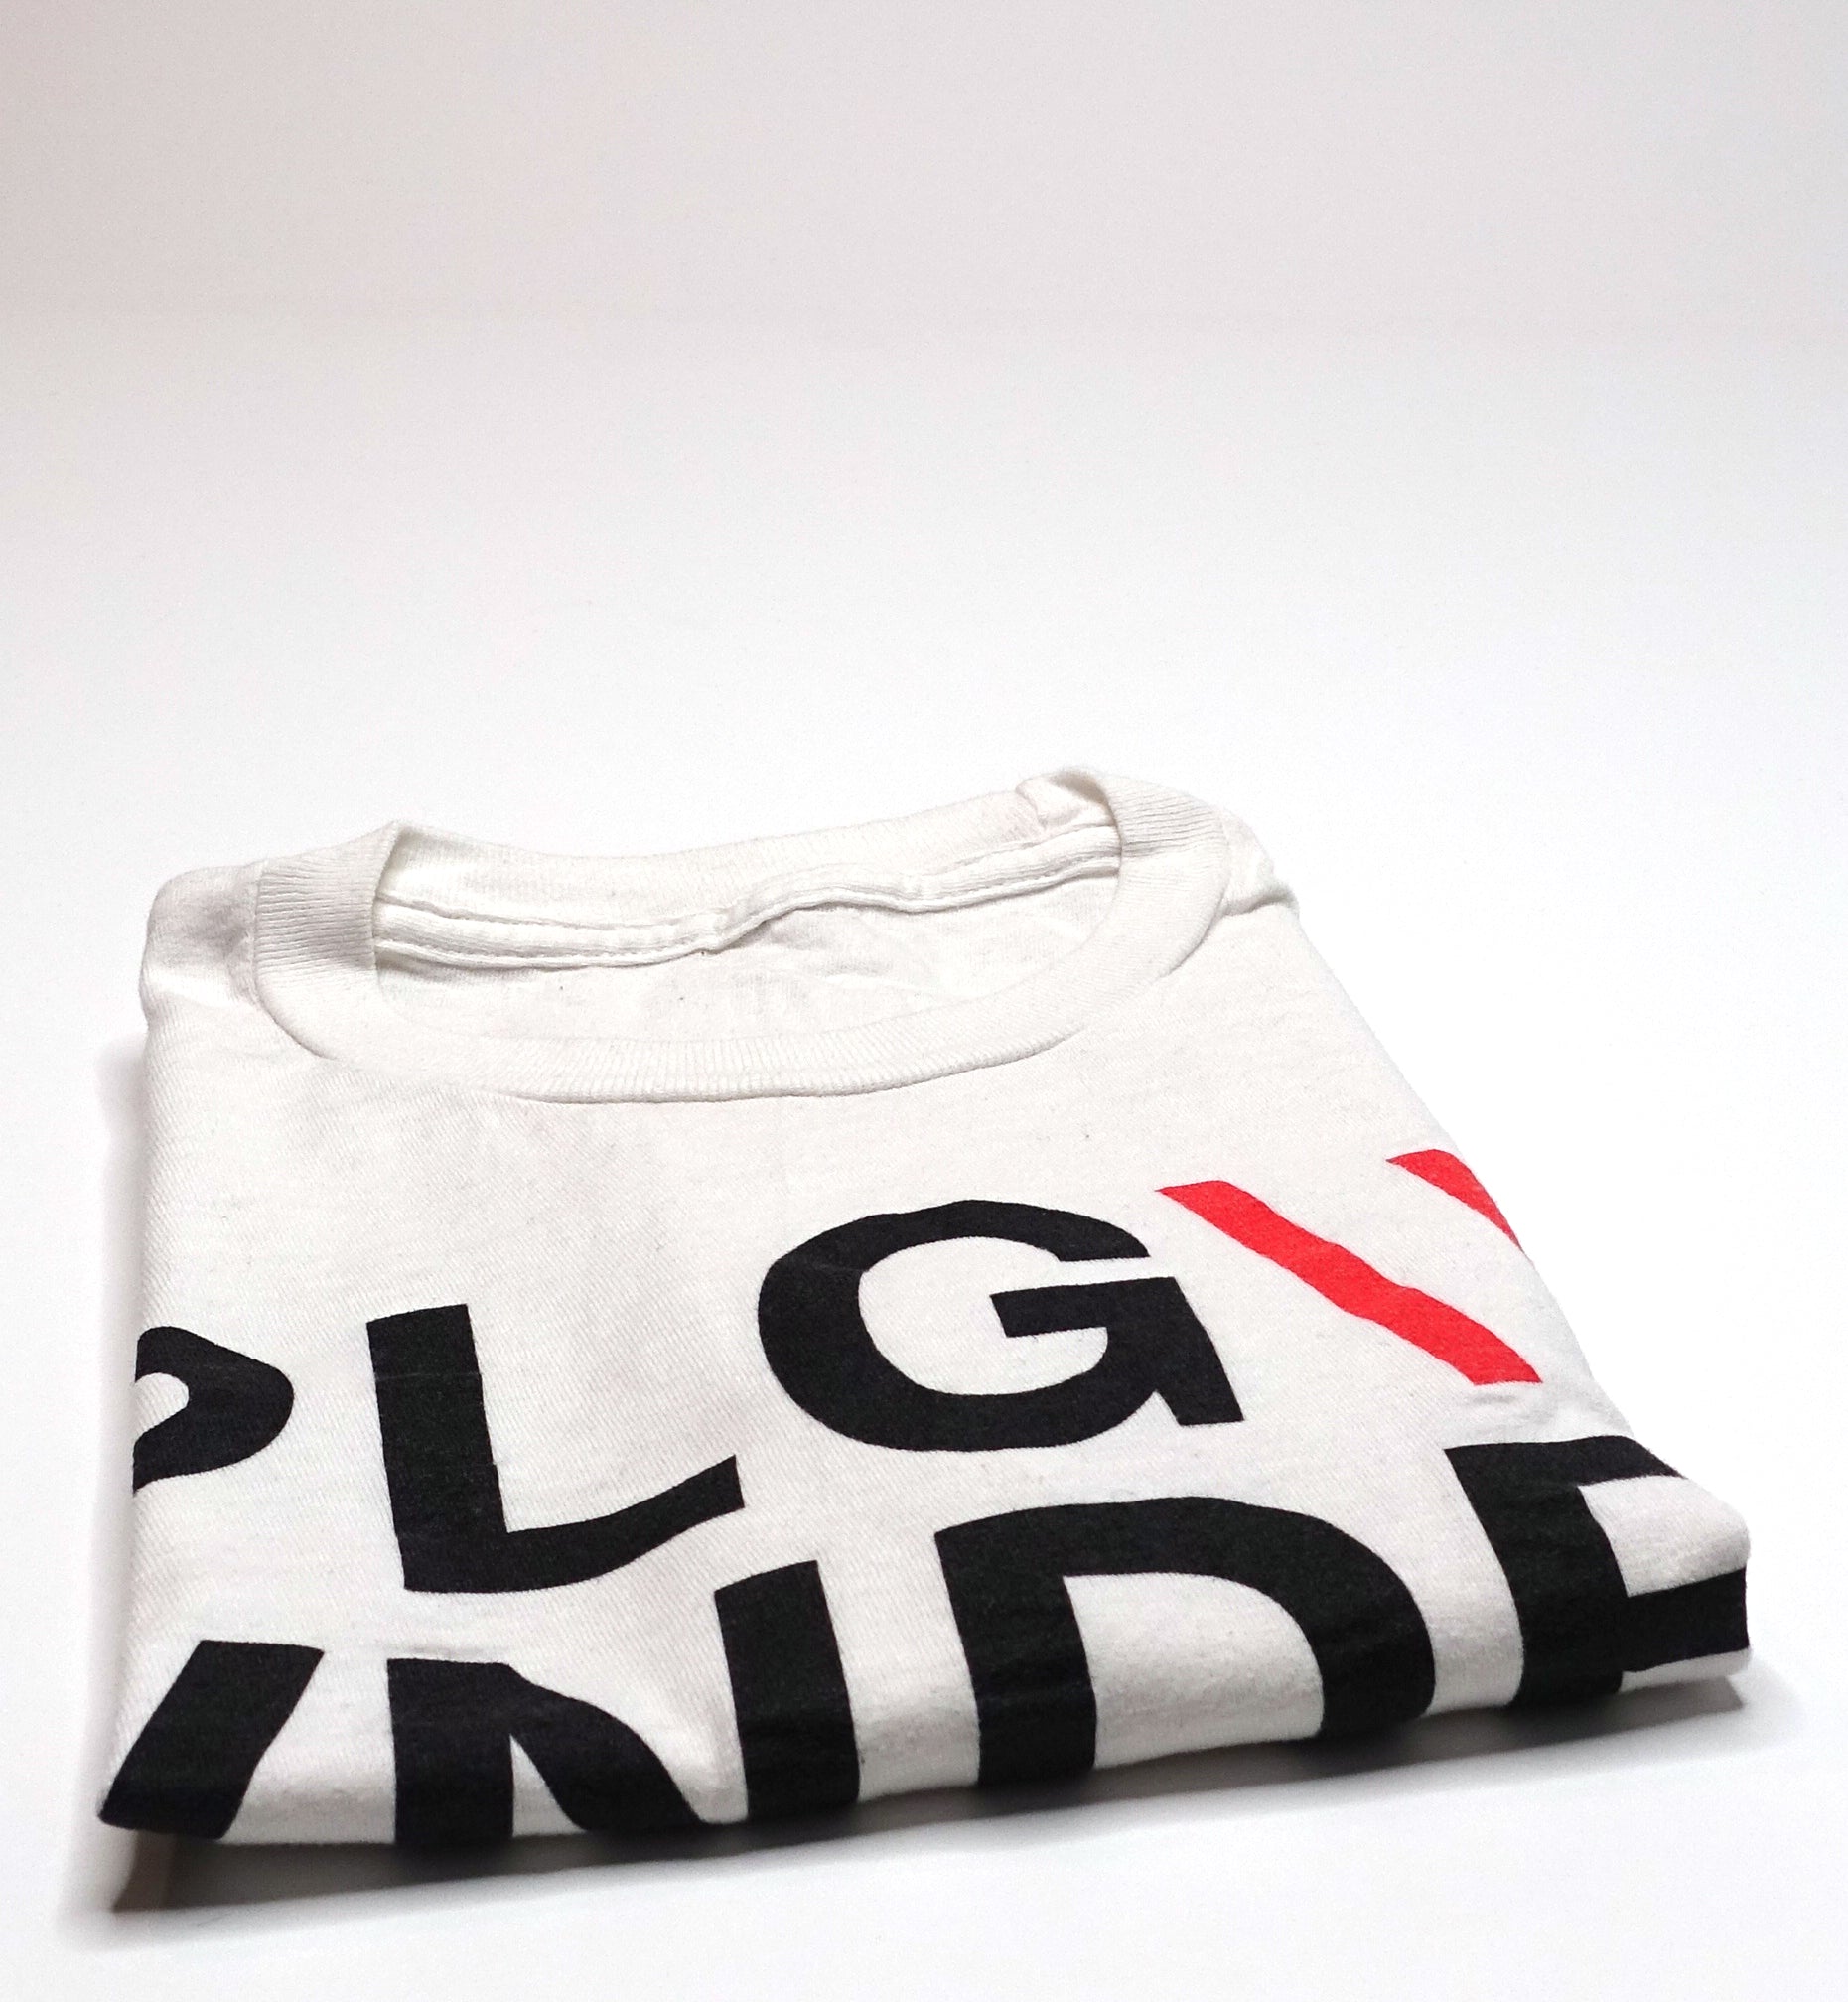 Plague Vendor - PLG\\\VNDR 2015 Tour Shirt Size Small